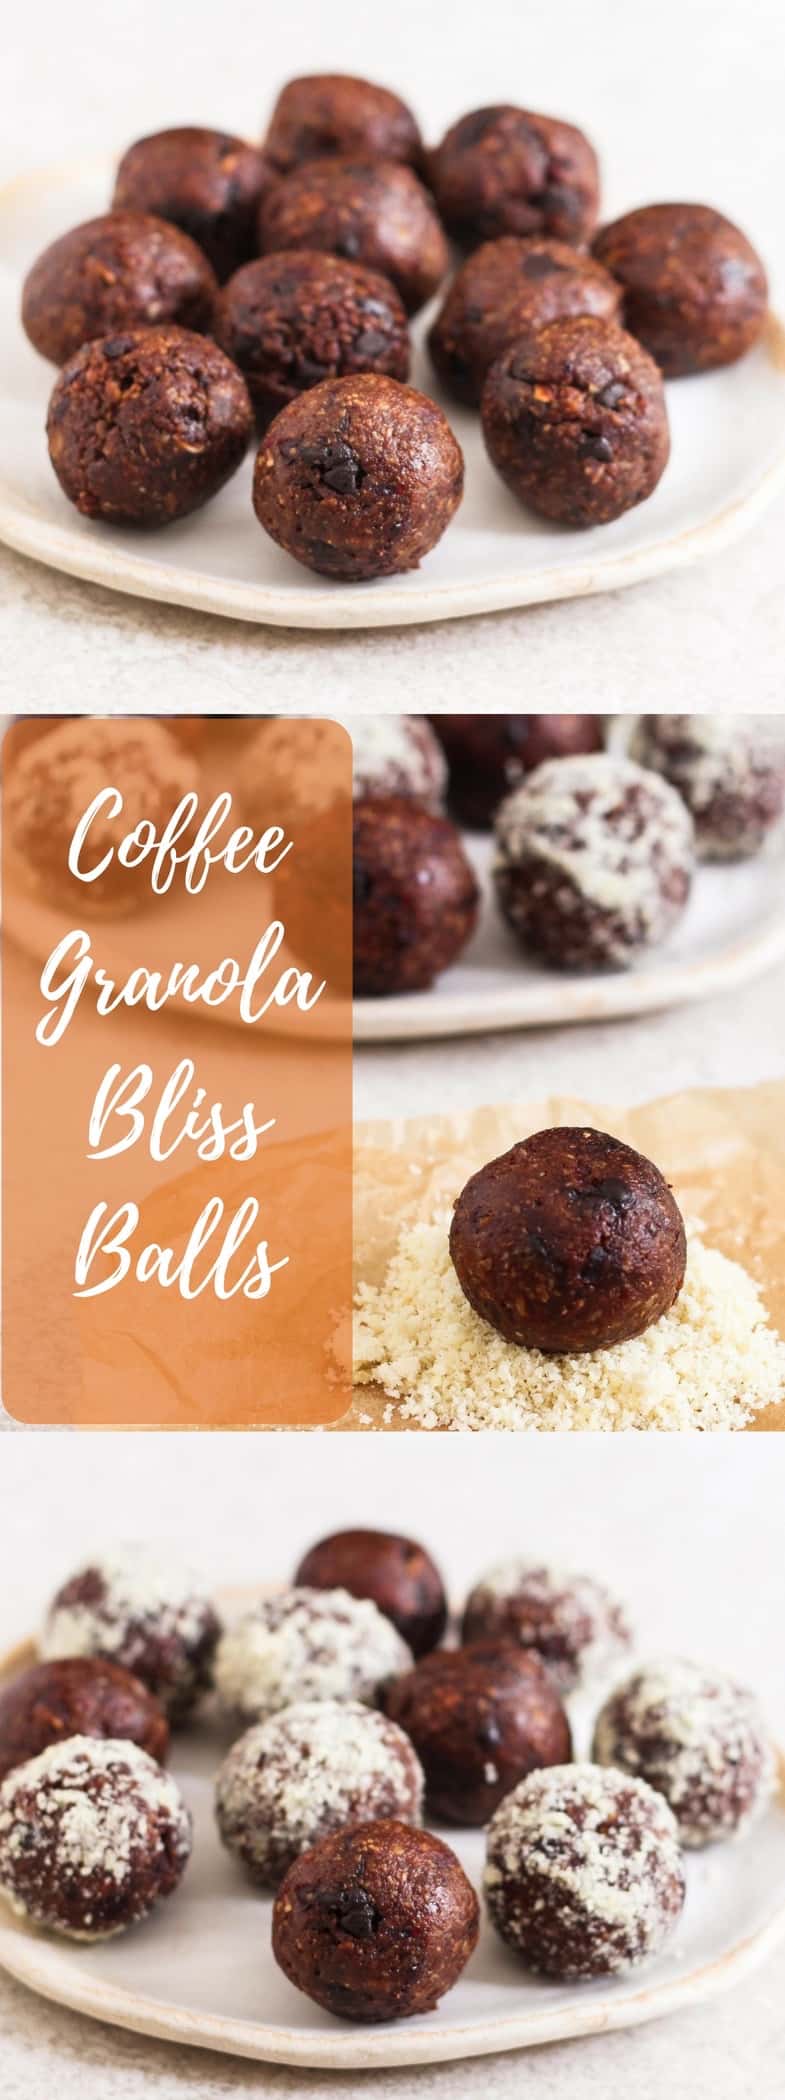 Coffee Granola Bliss Balls vegan healthy snack dairyfree dessert